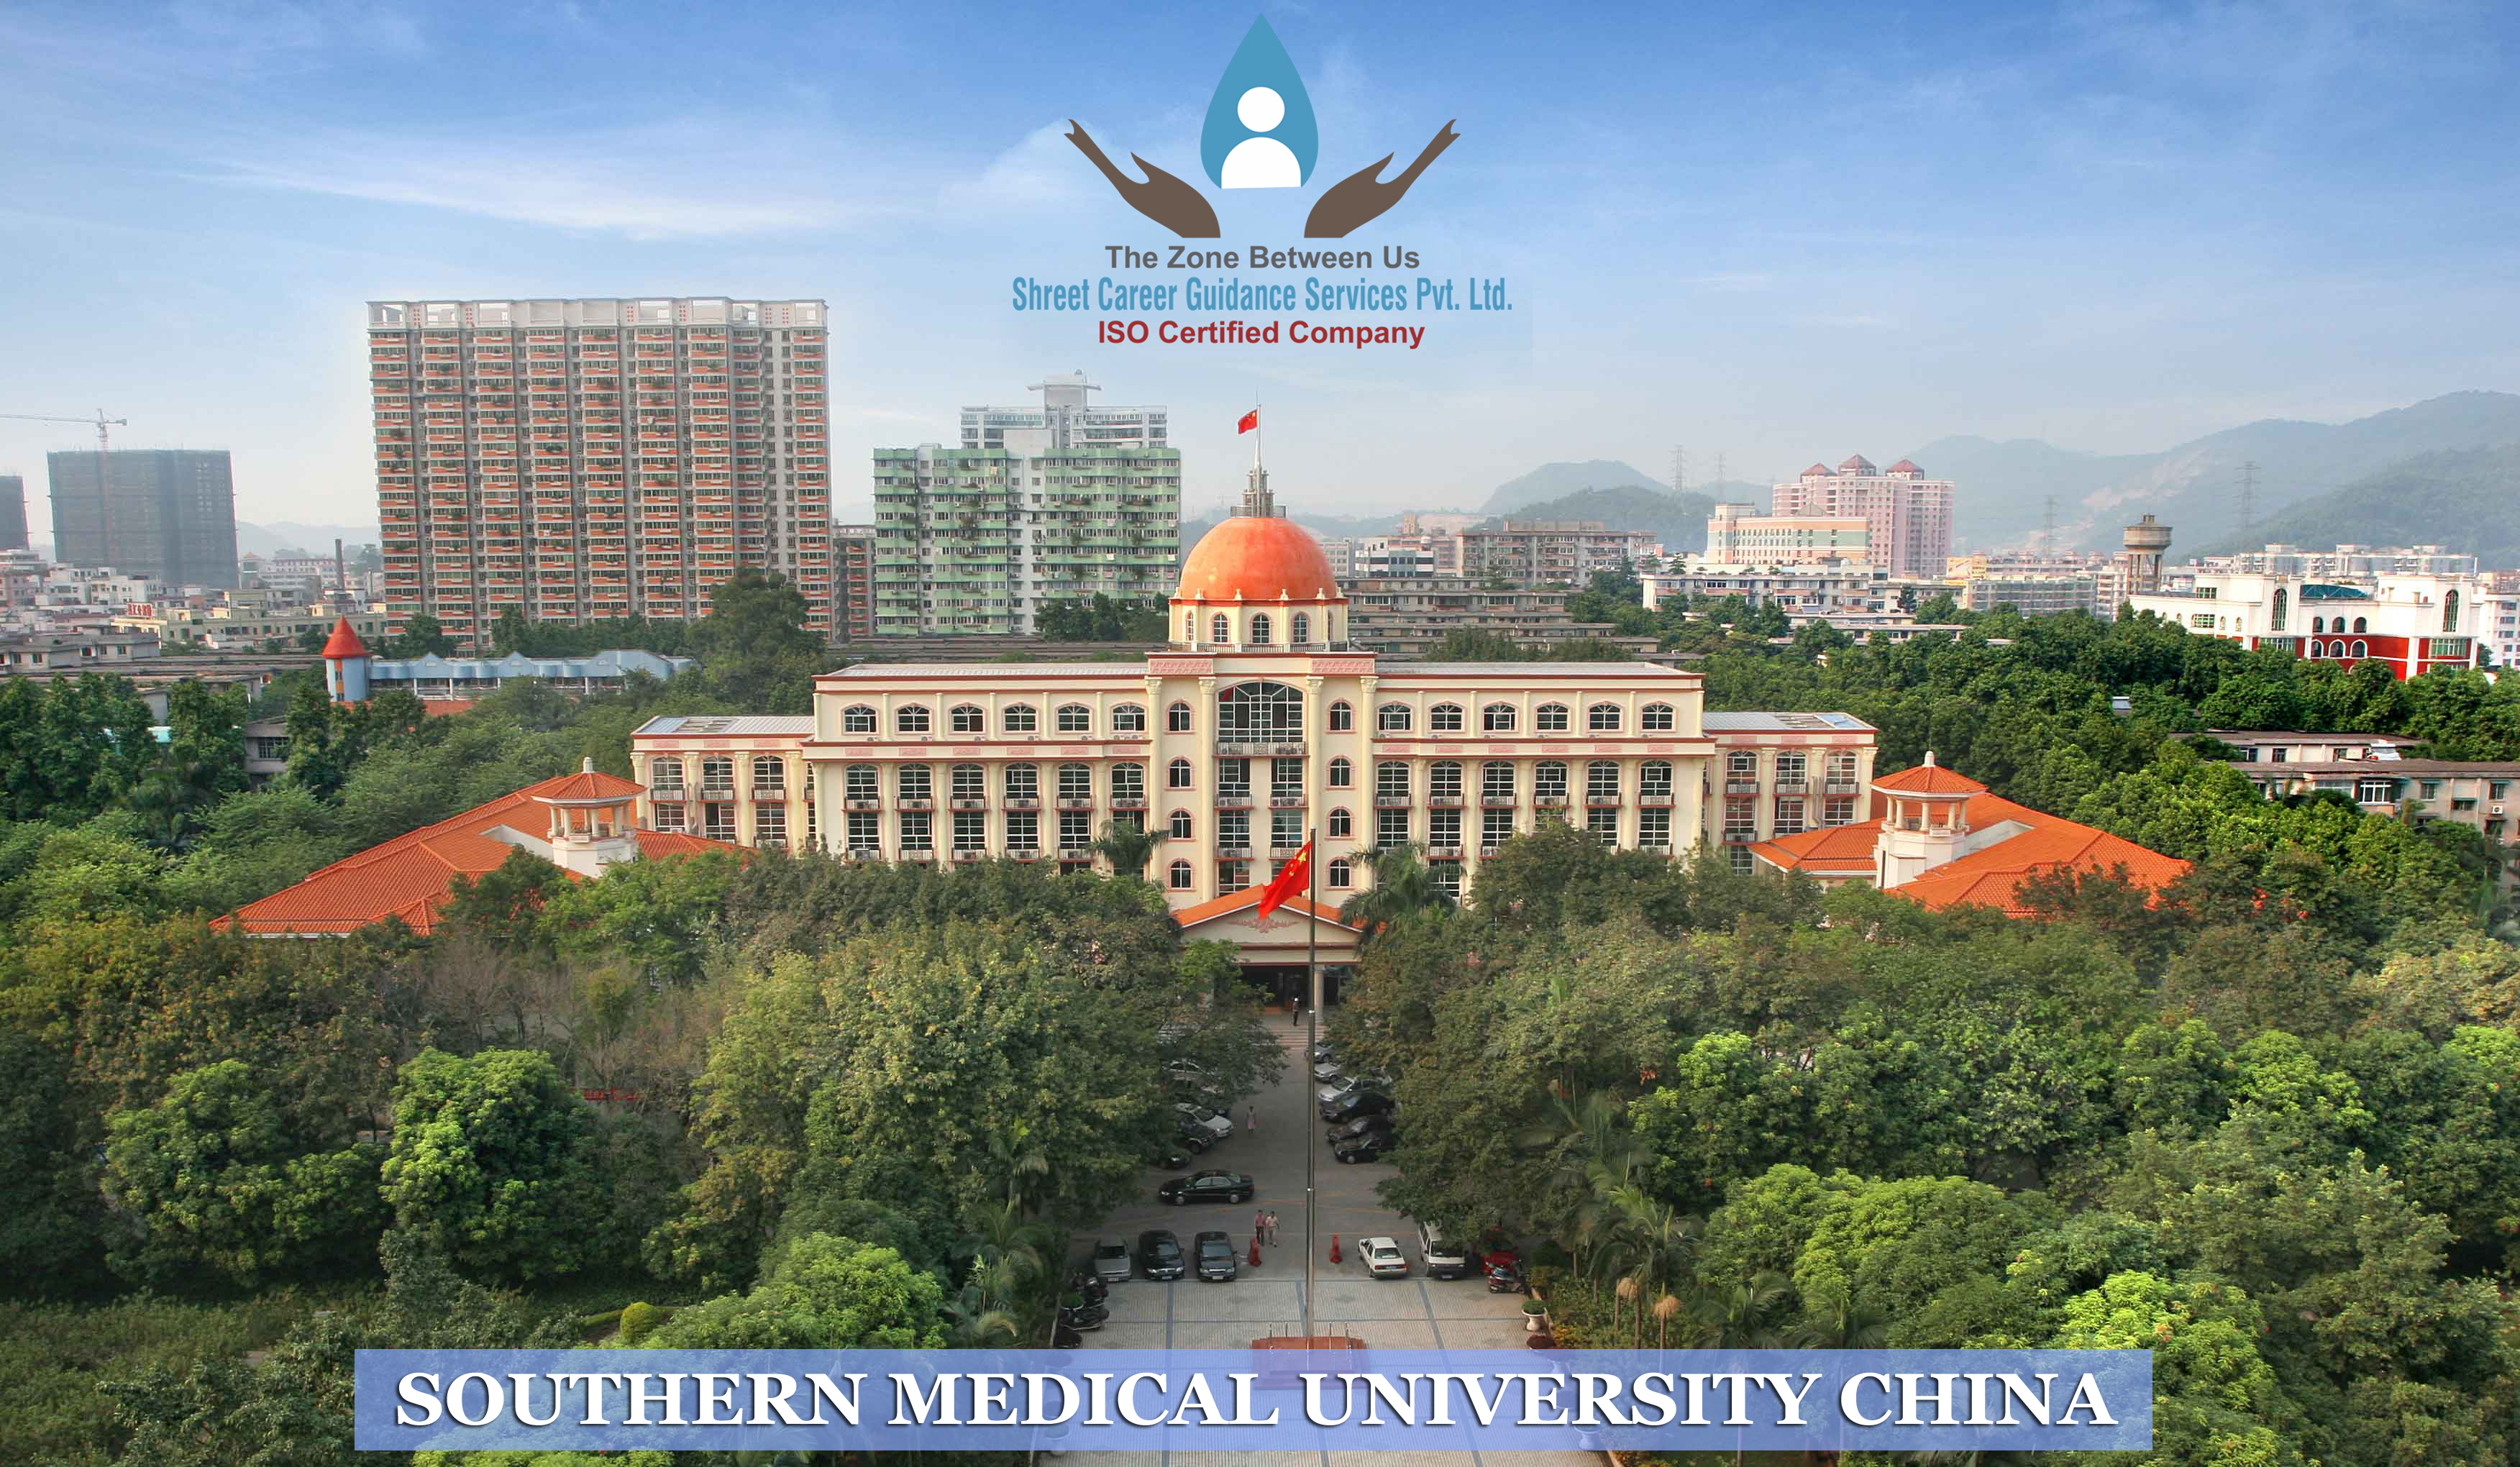 Southern Medical University China